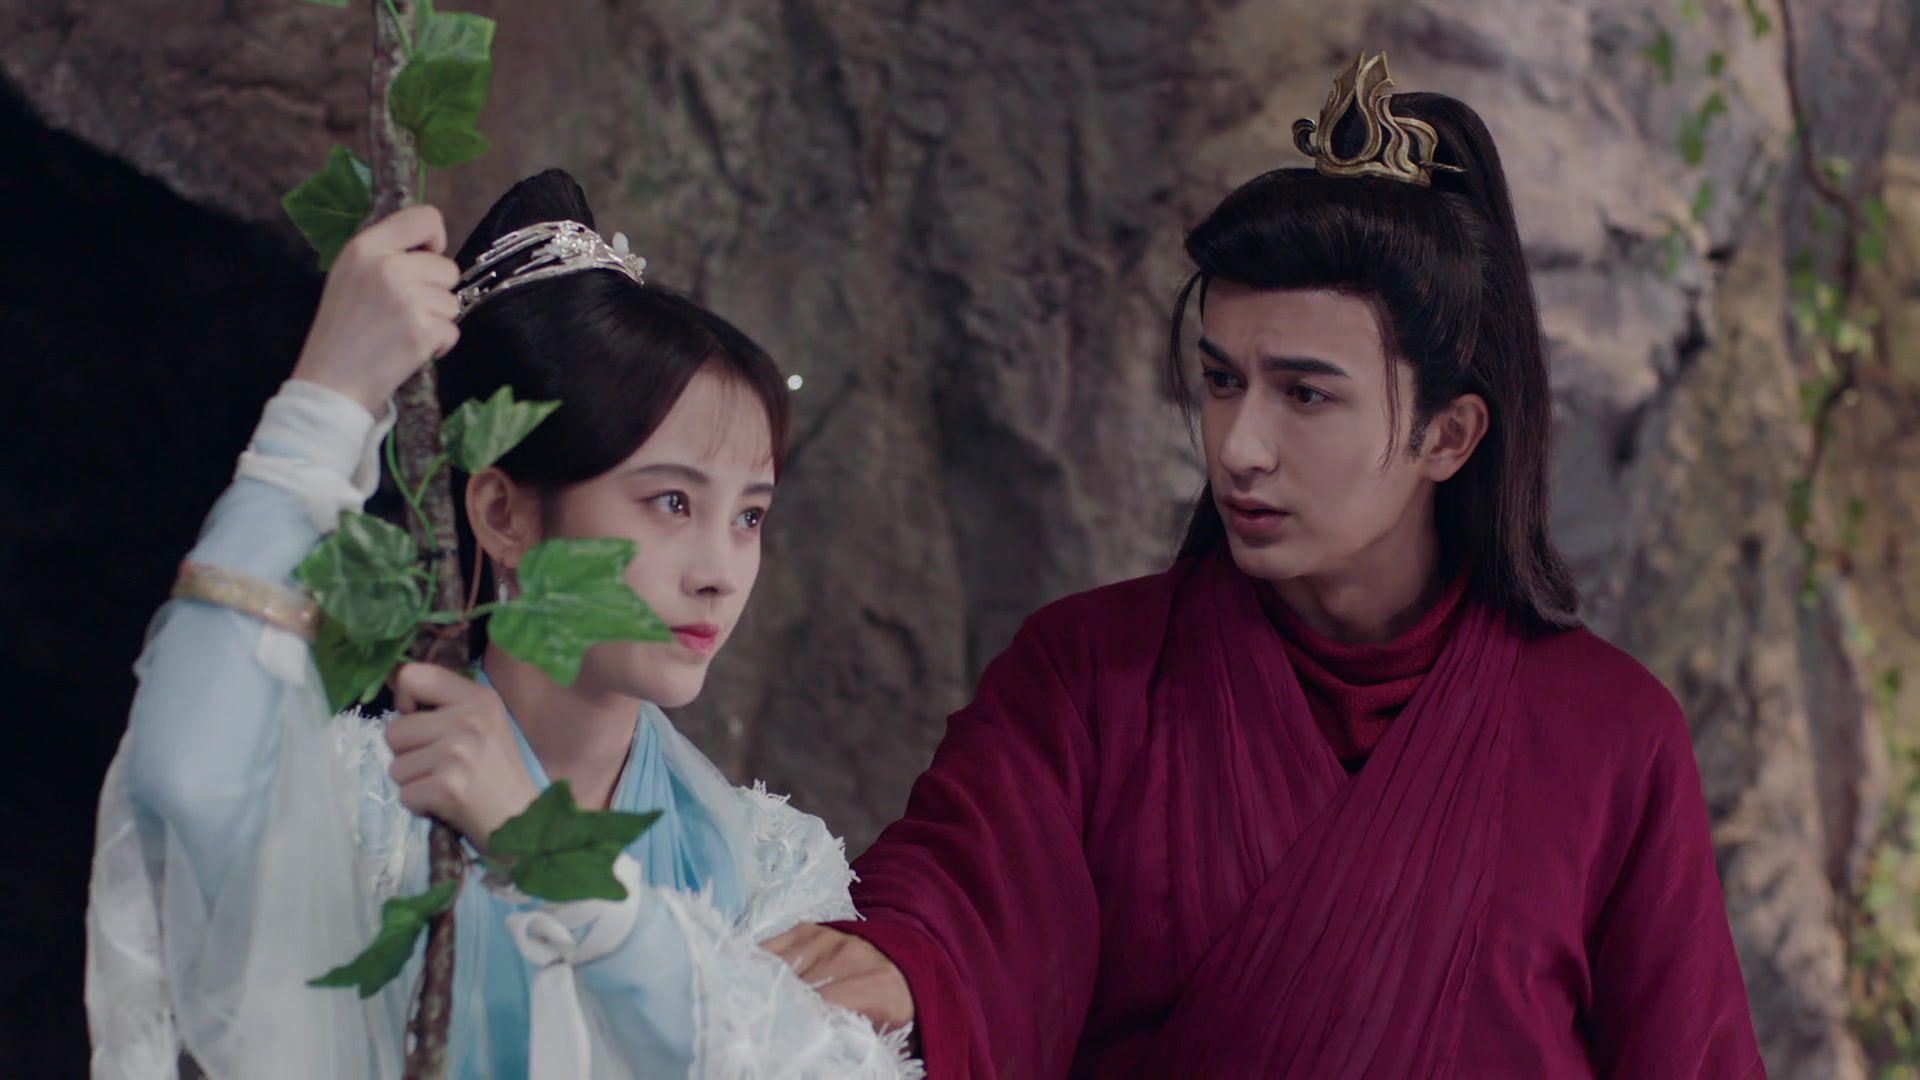 Legend of Yun Xi Episode 21 - 芸汐传 Full Episodes Free